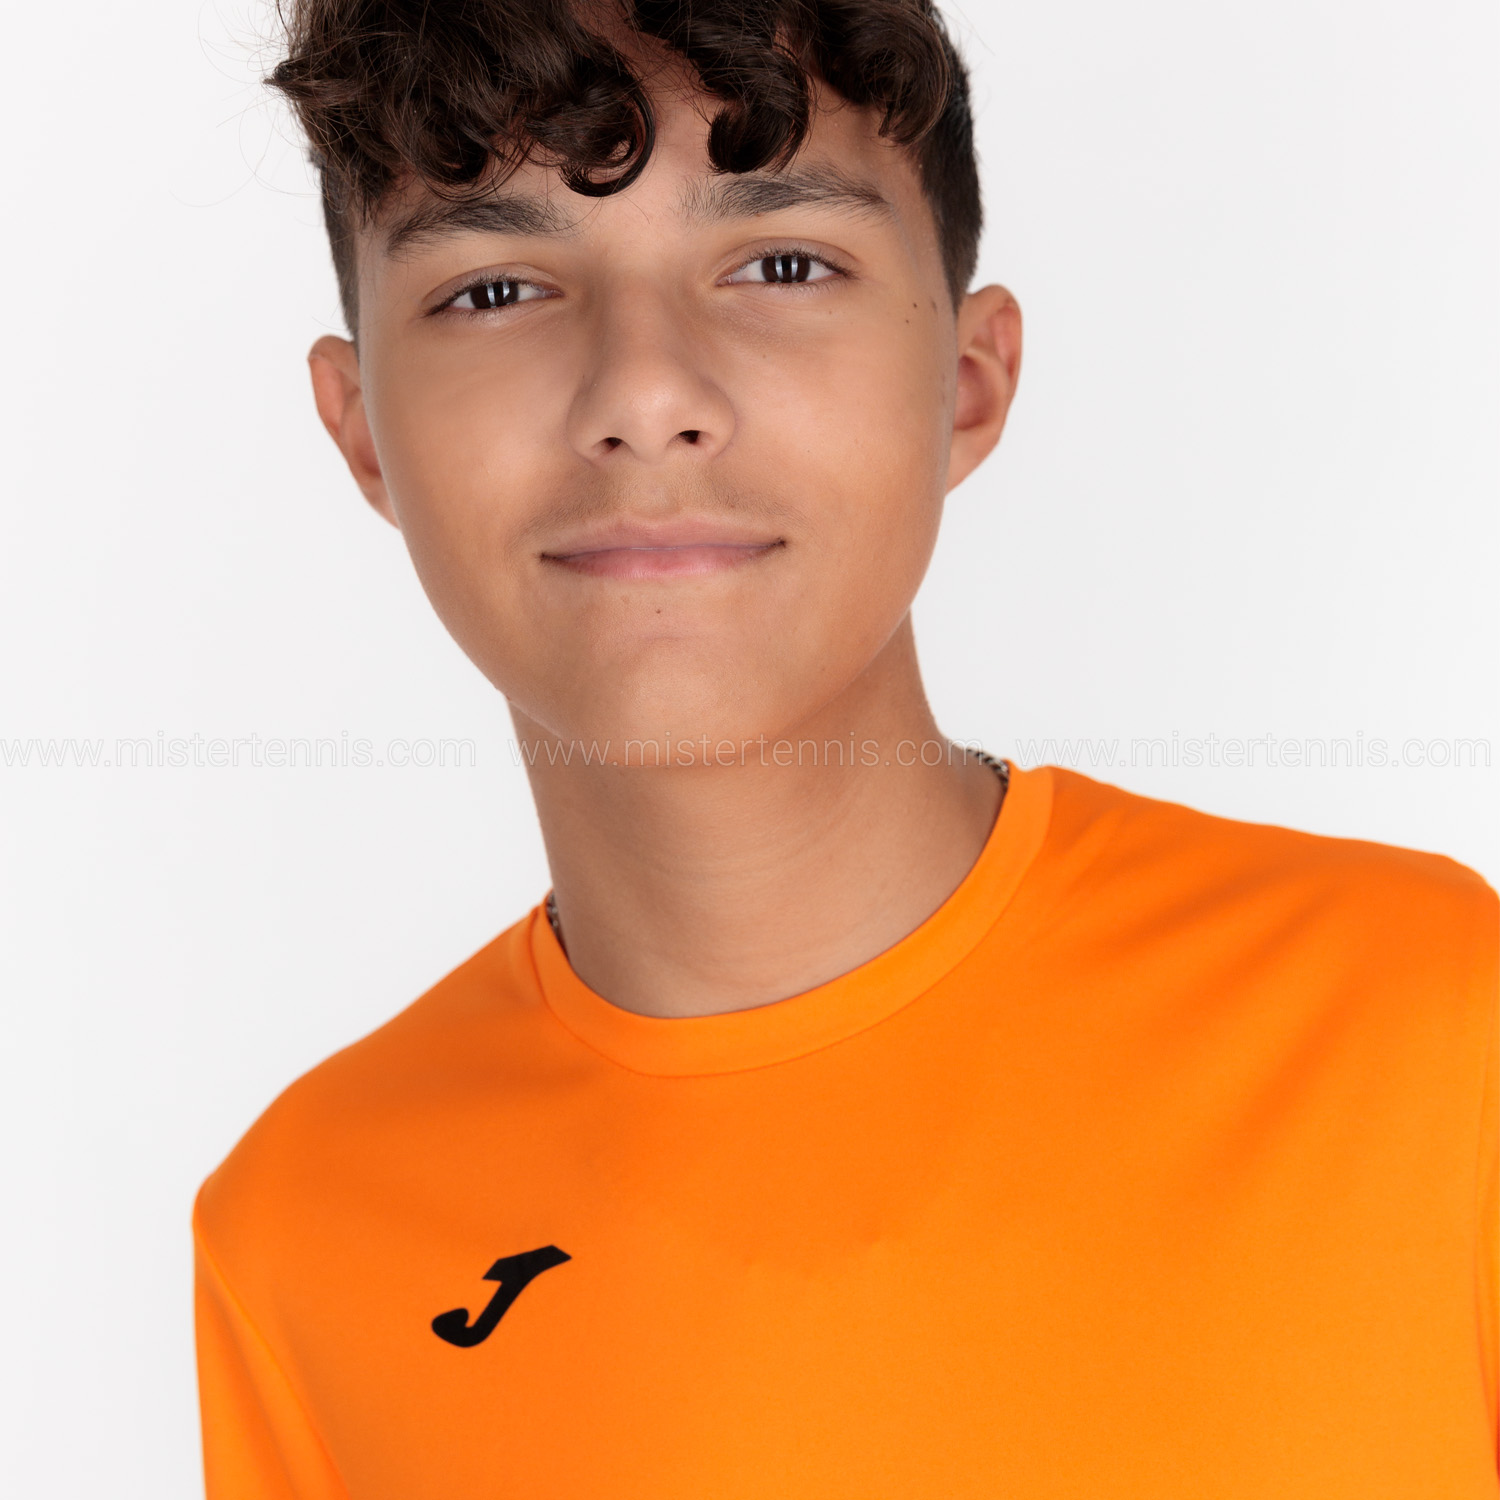 Joma Combi T-Shirt Boy - Orange